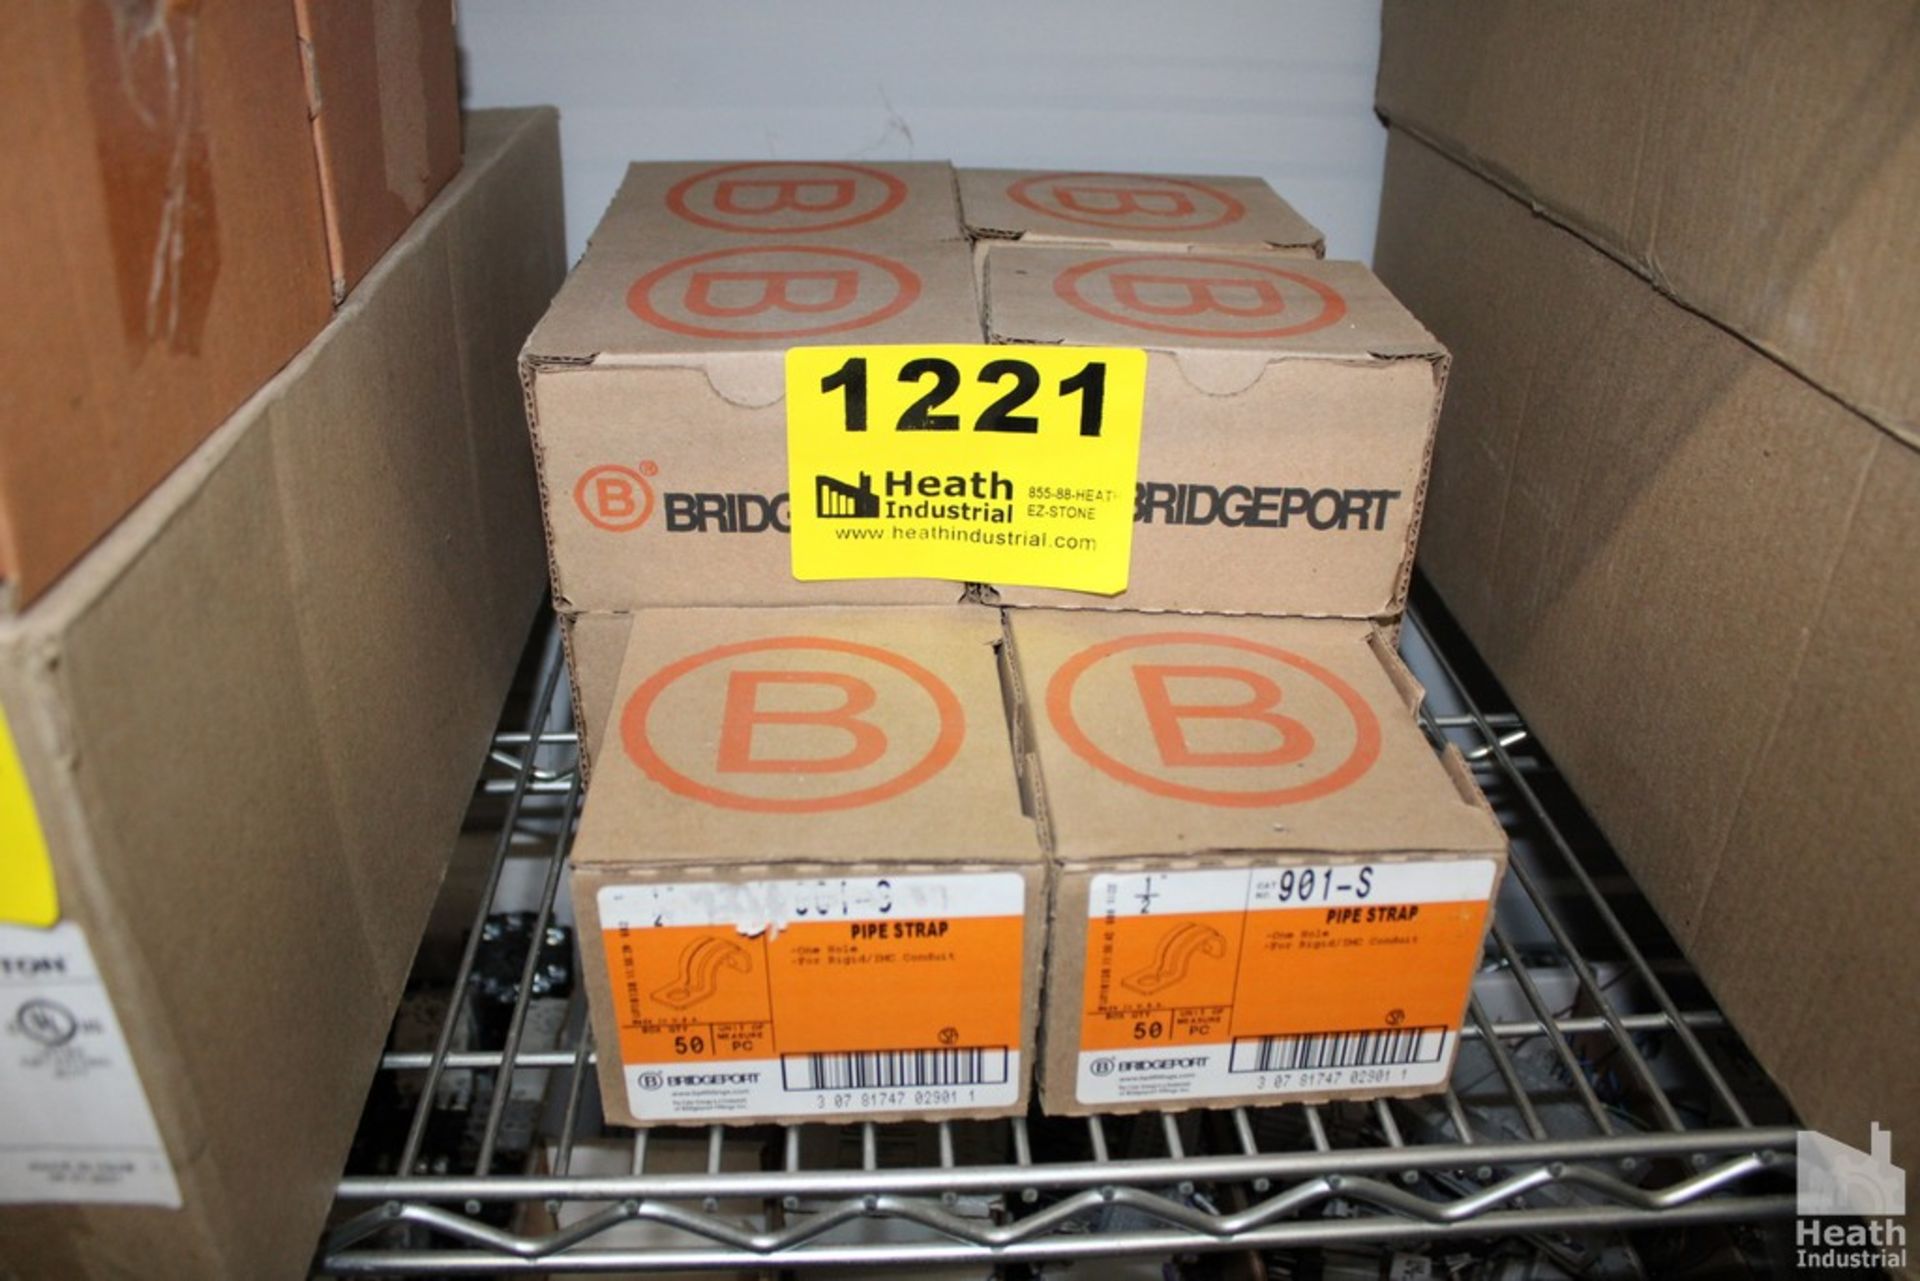 (10) BOXES OF BRIDGEPORT 901-S PIPE STRAPS